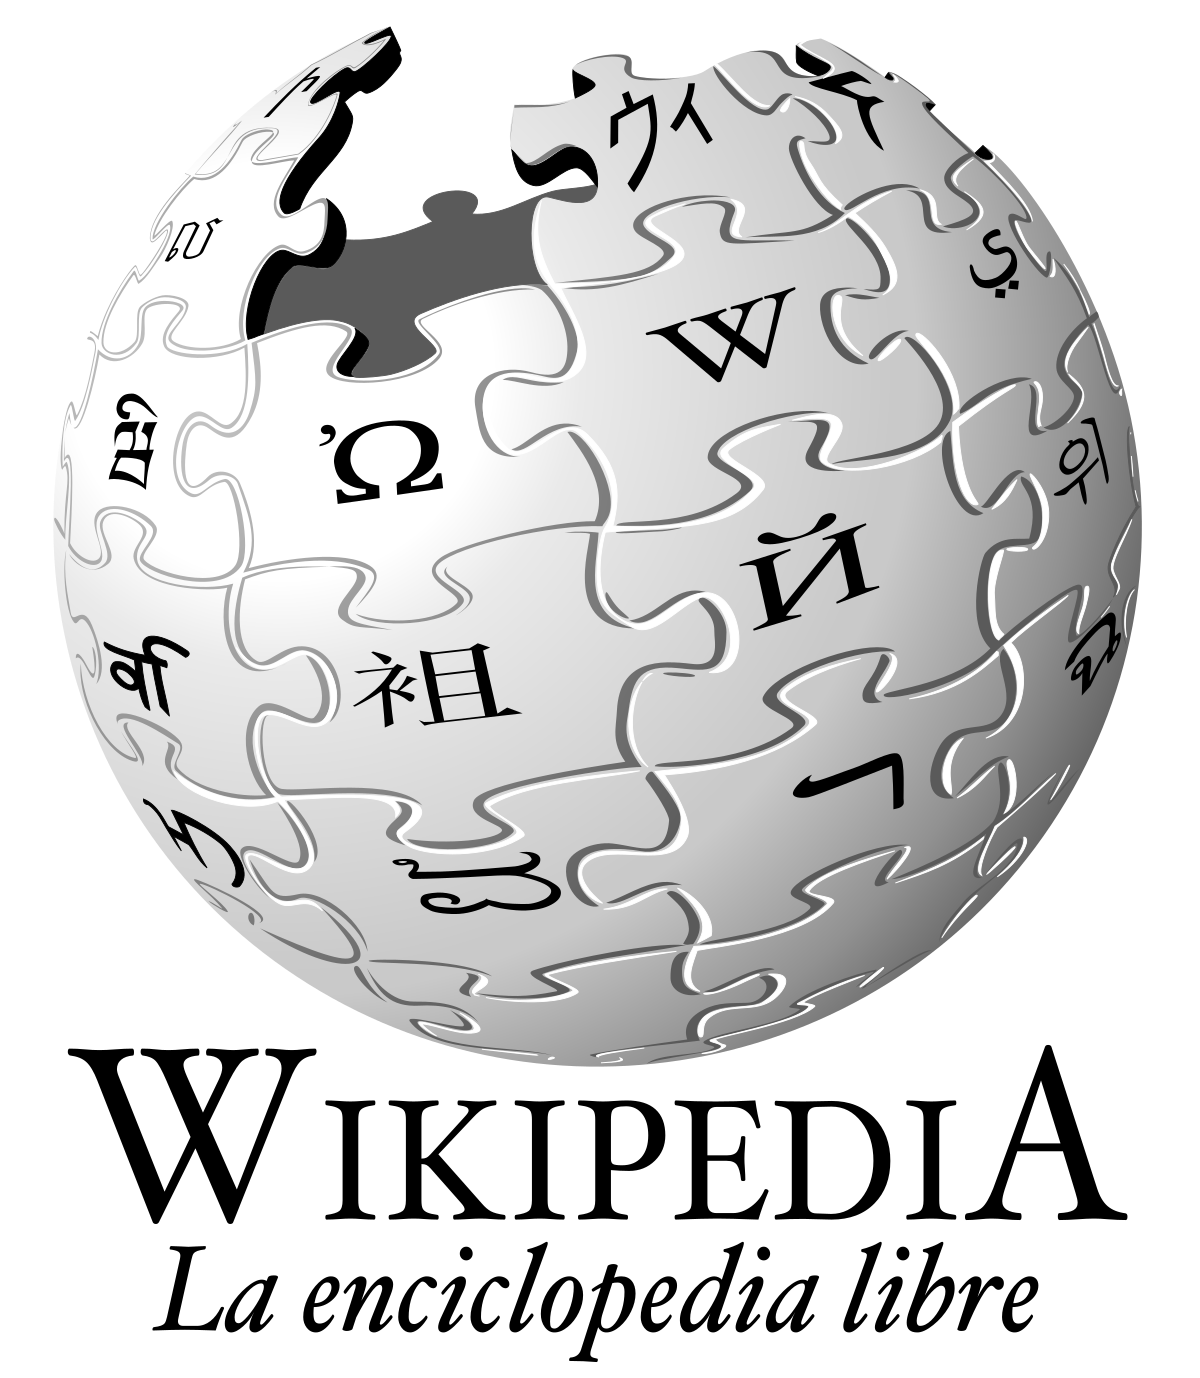 3 https ru wikipedia org. Википедия картинки. Википедия логотип. Значок Википедии. Ремипедия.